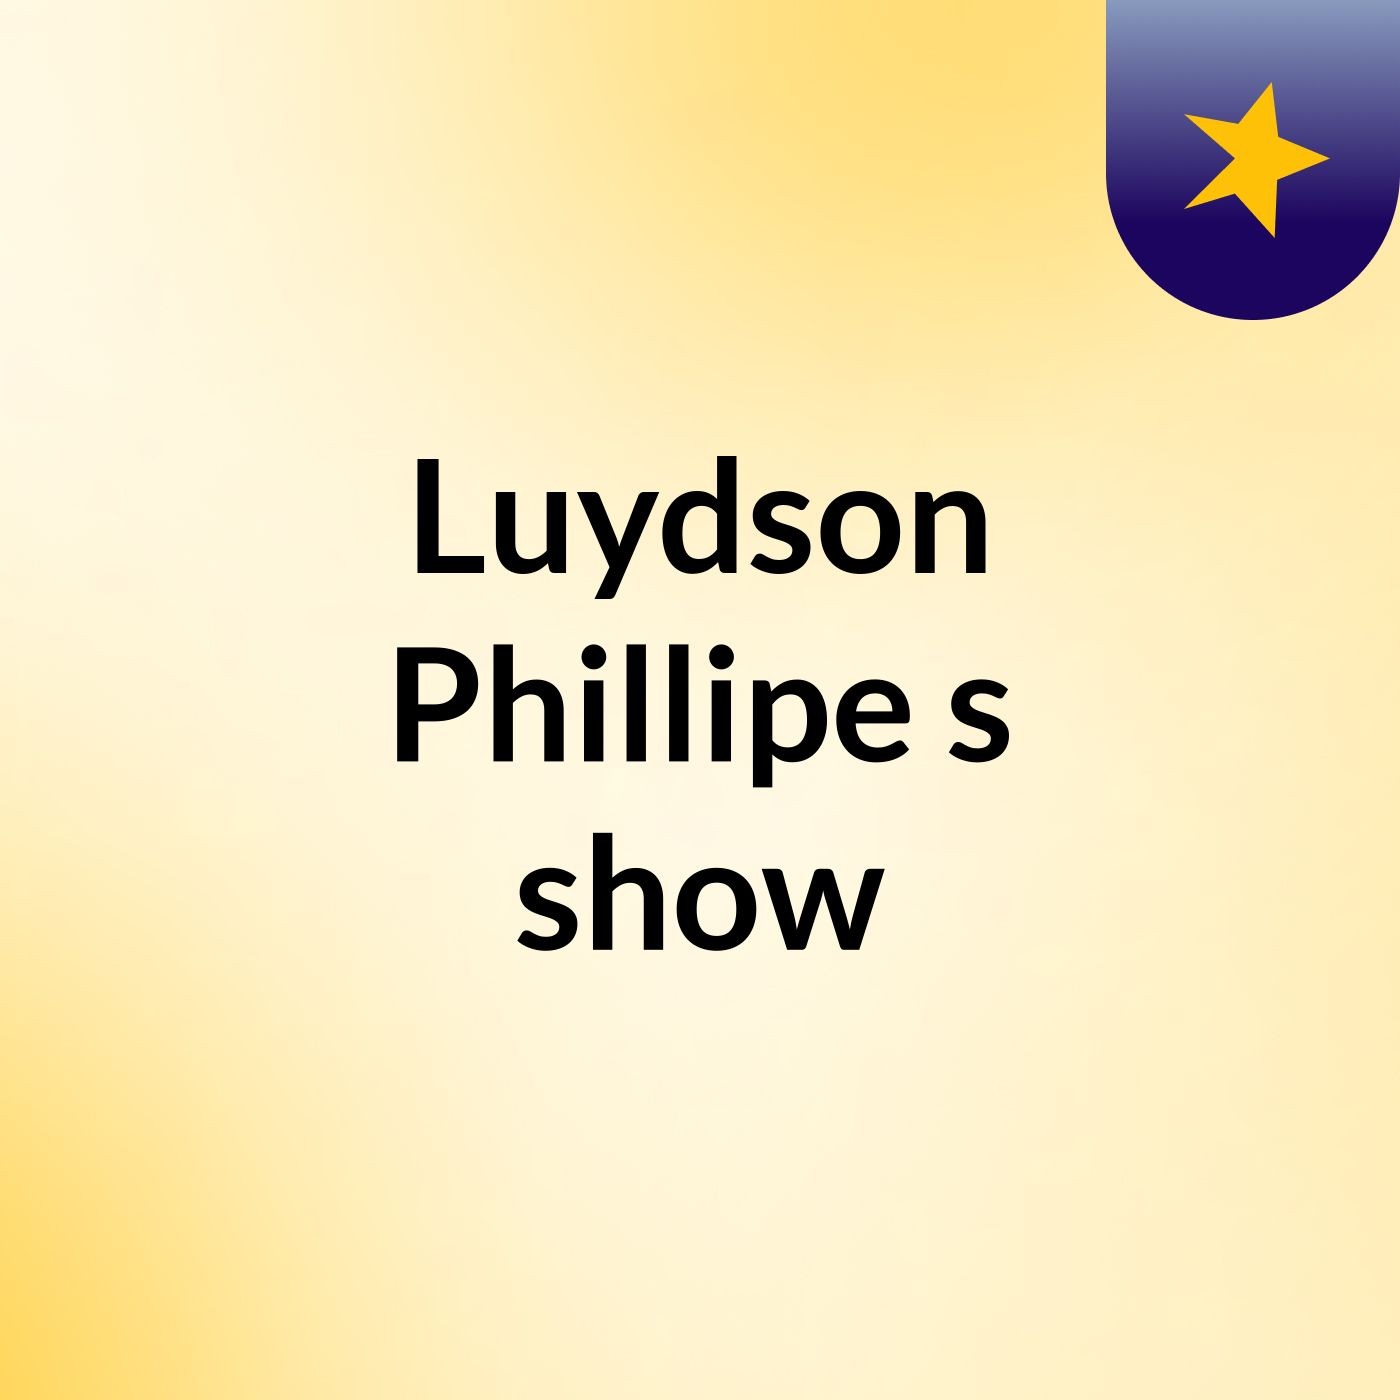 Luydson Phillipe's show